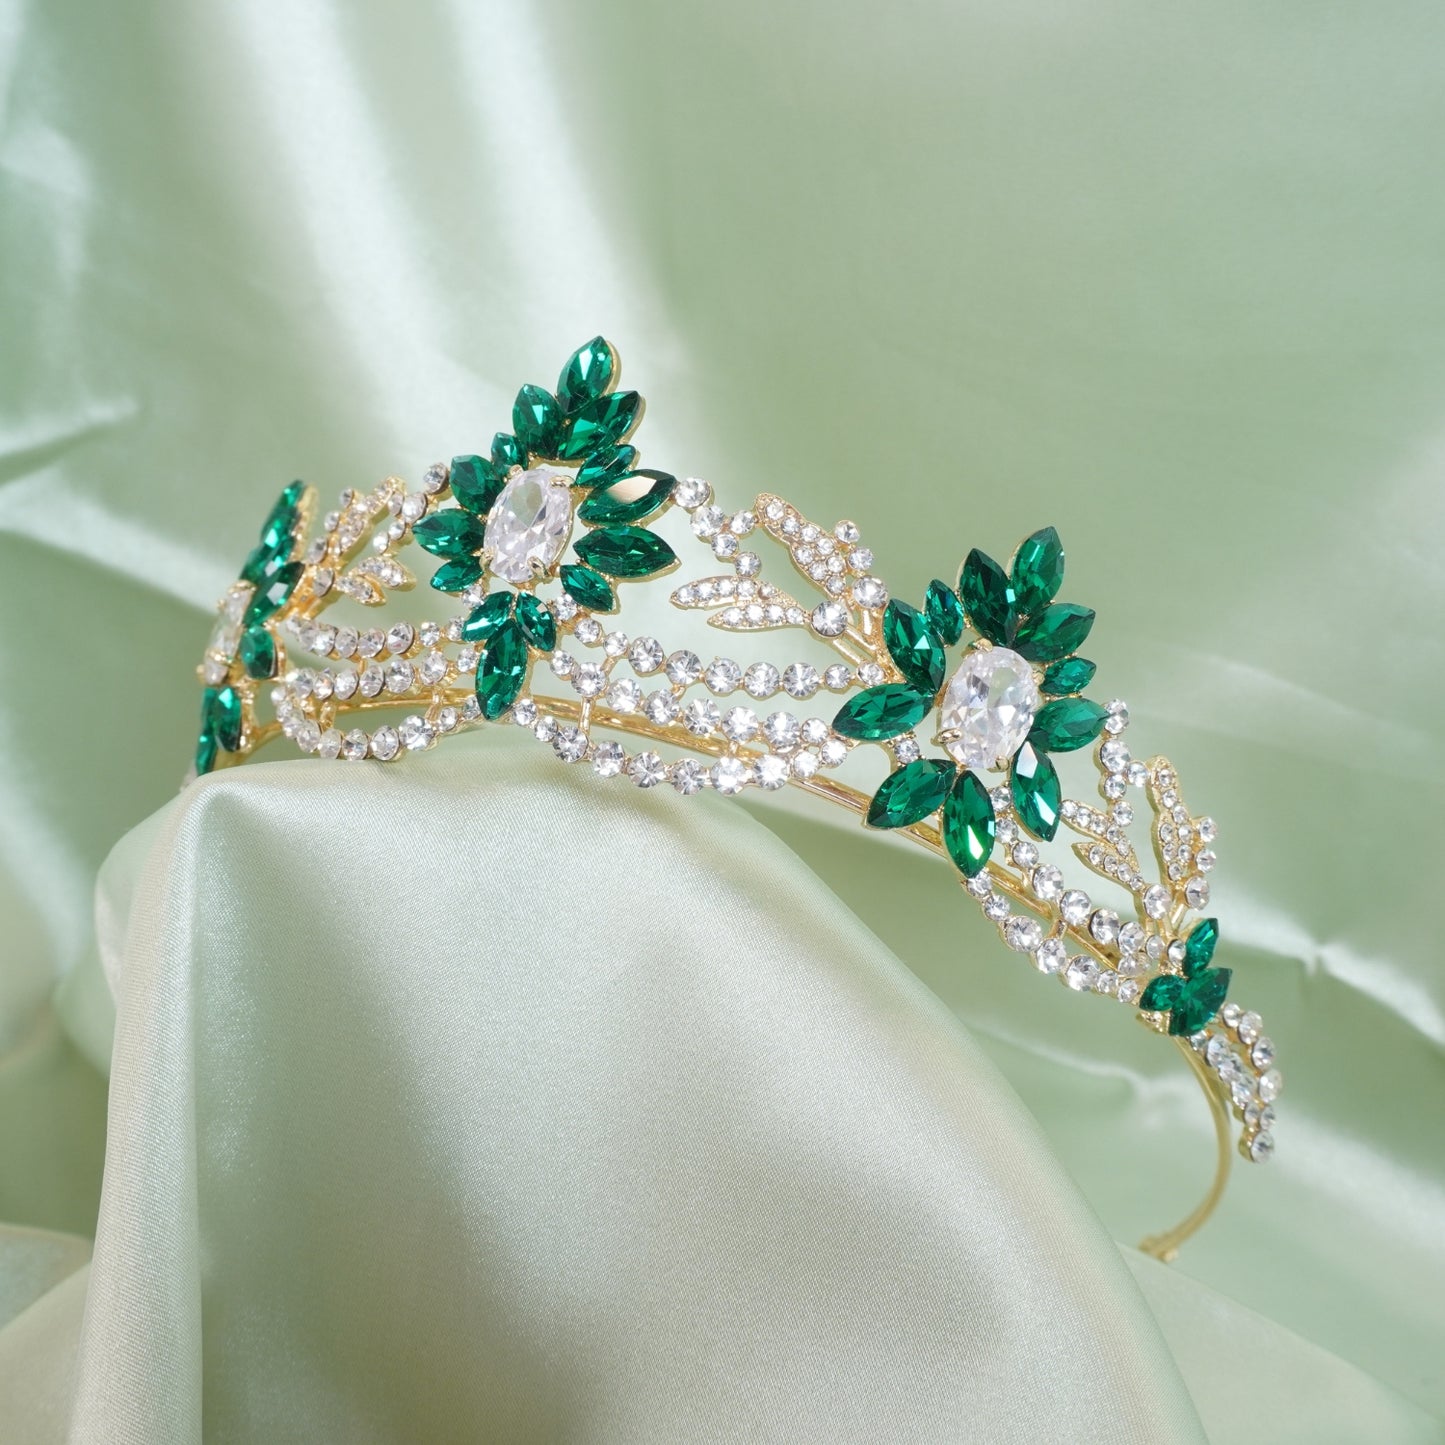 Queen Crystal Crown Bridal Tiaras and Crowns for Women, Crystal Crown Vintage Princess Tiara Rhinestone Green